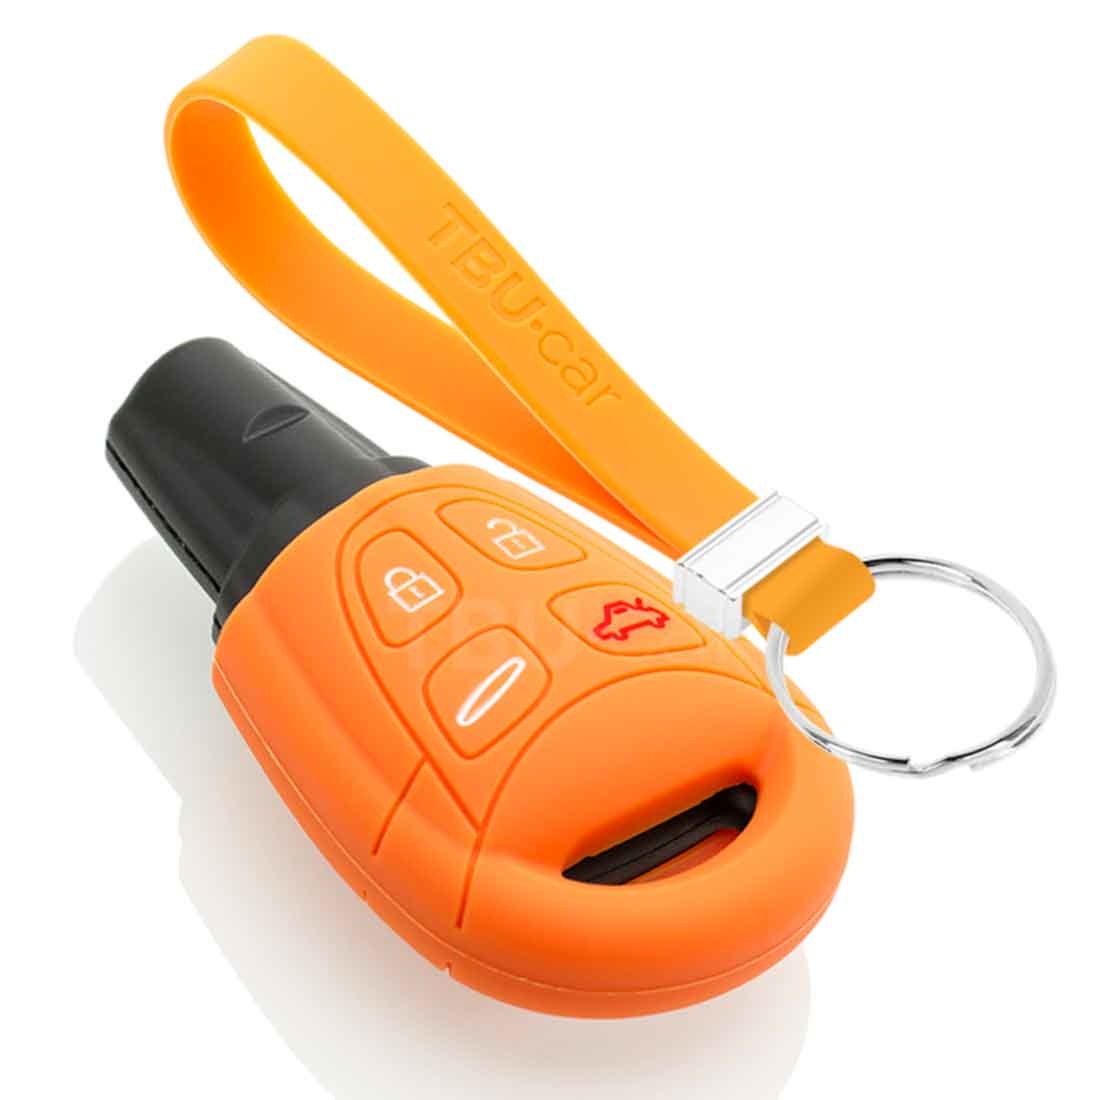 TBU car TBU car Car key cover compatible with Saab - Silicone Protective Remote Key Shell - FOB Case Cover - Orange